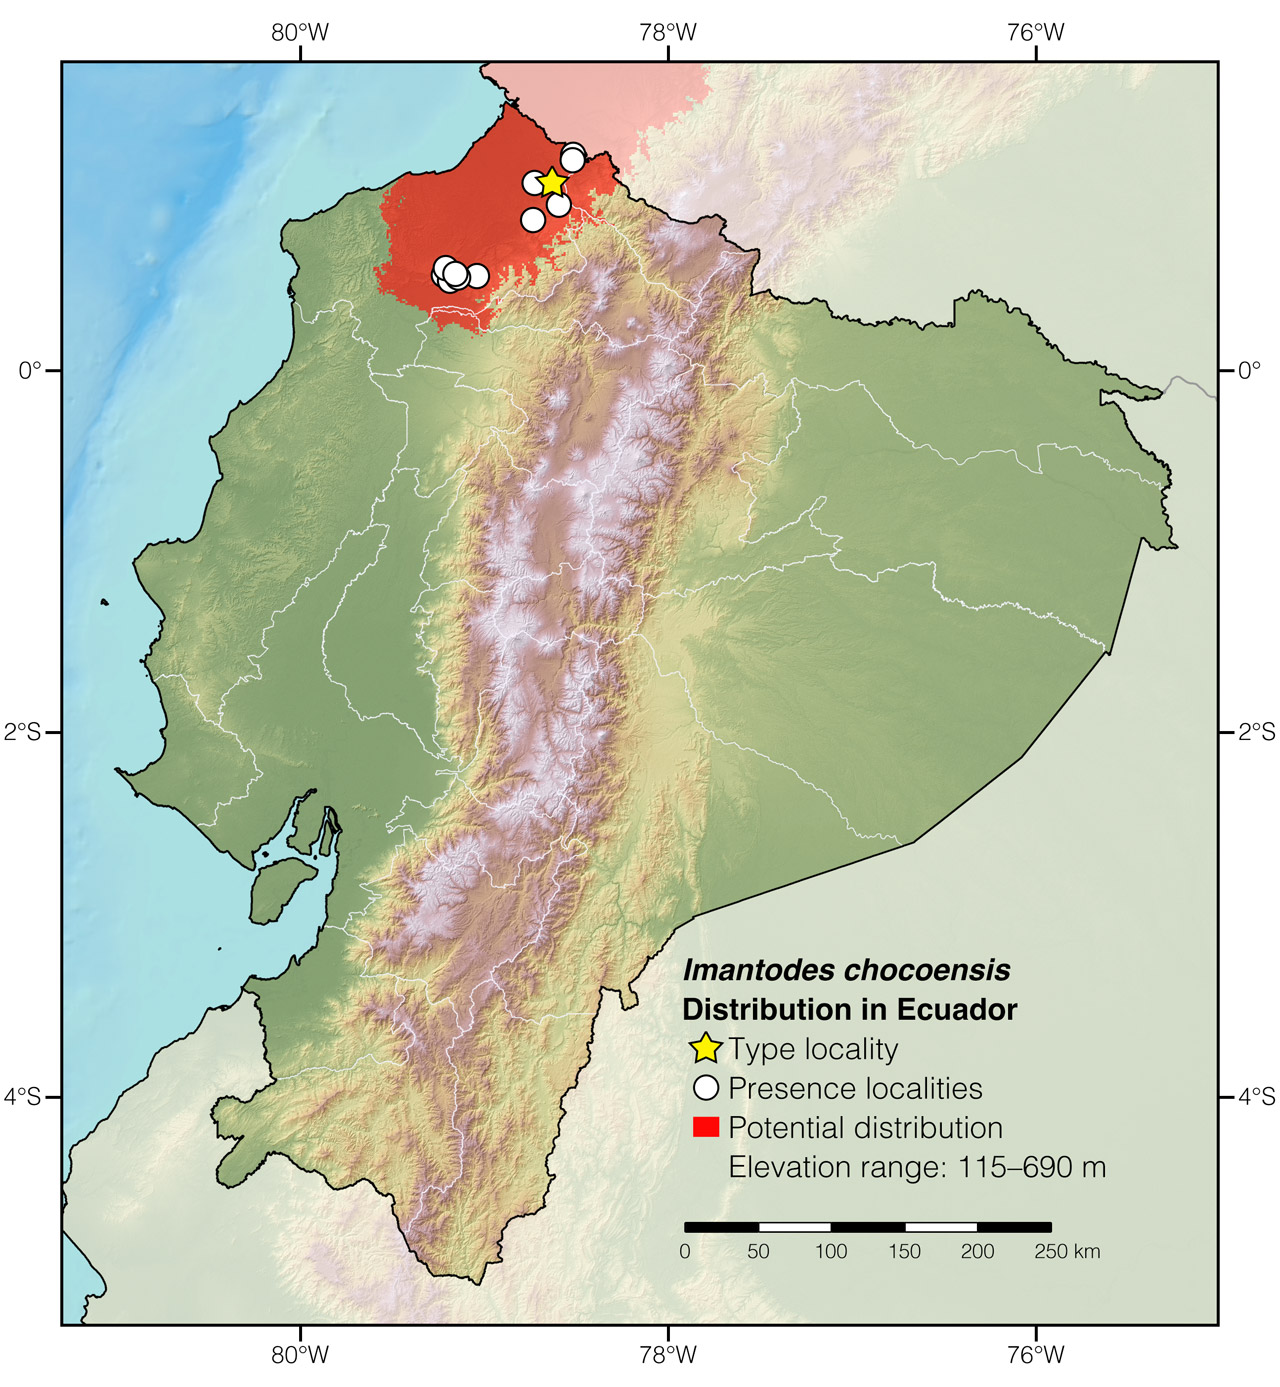 Distribution of Imantodes chocoensis in Ecuador